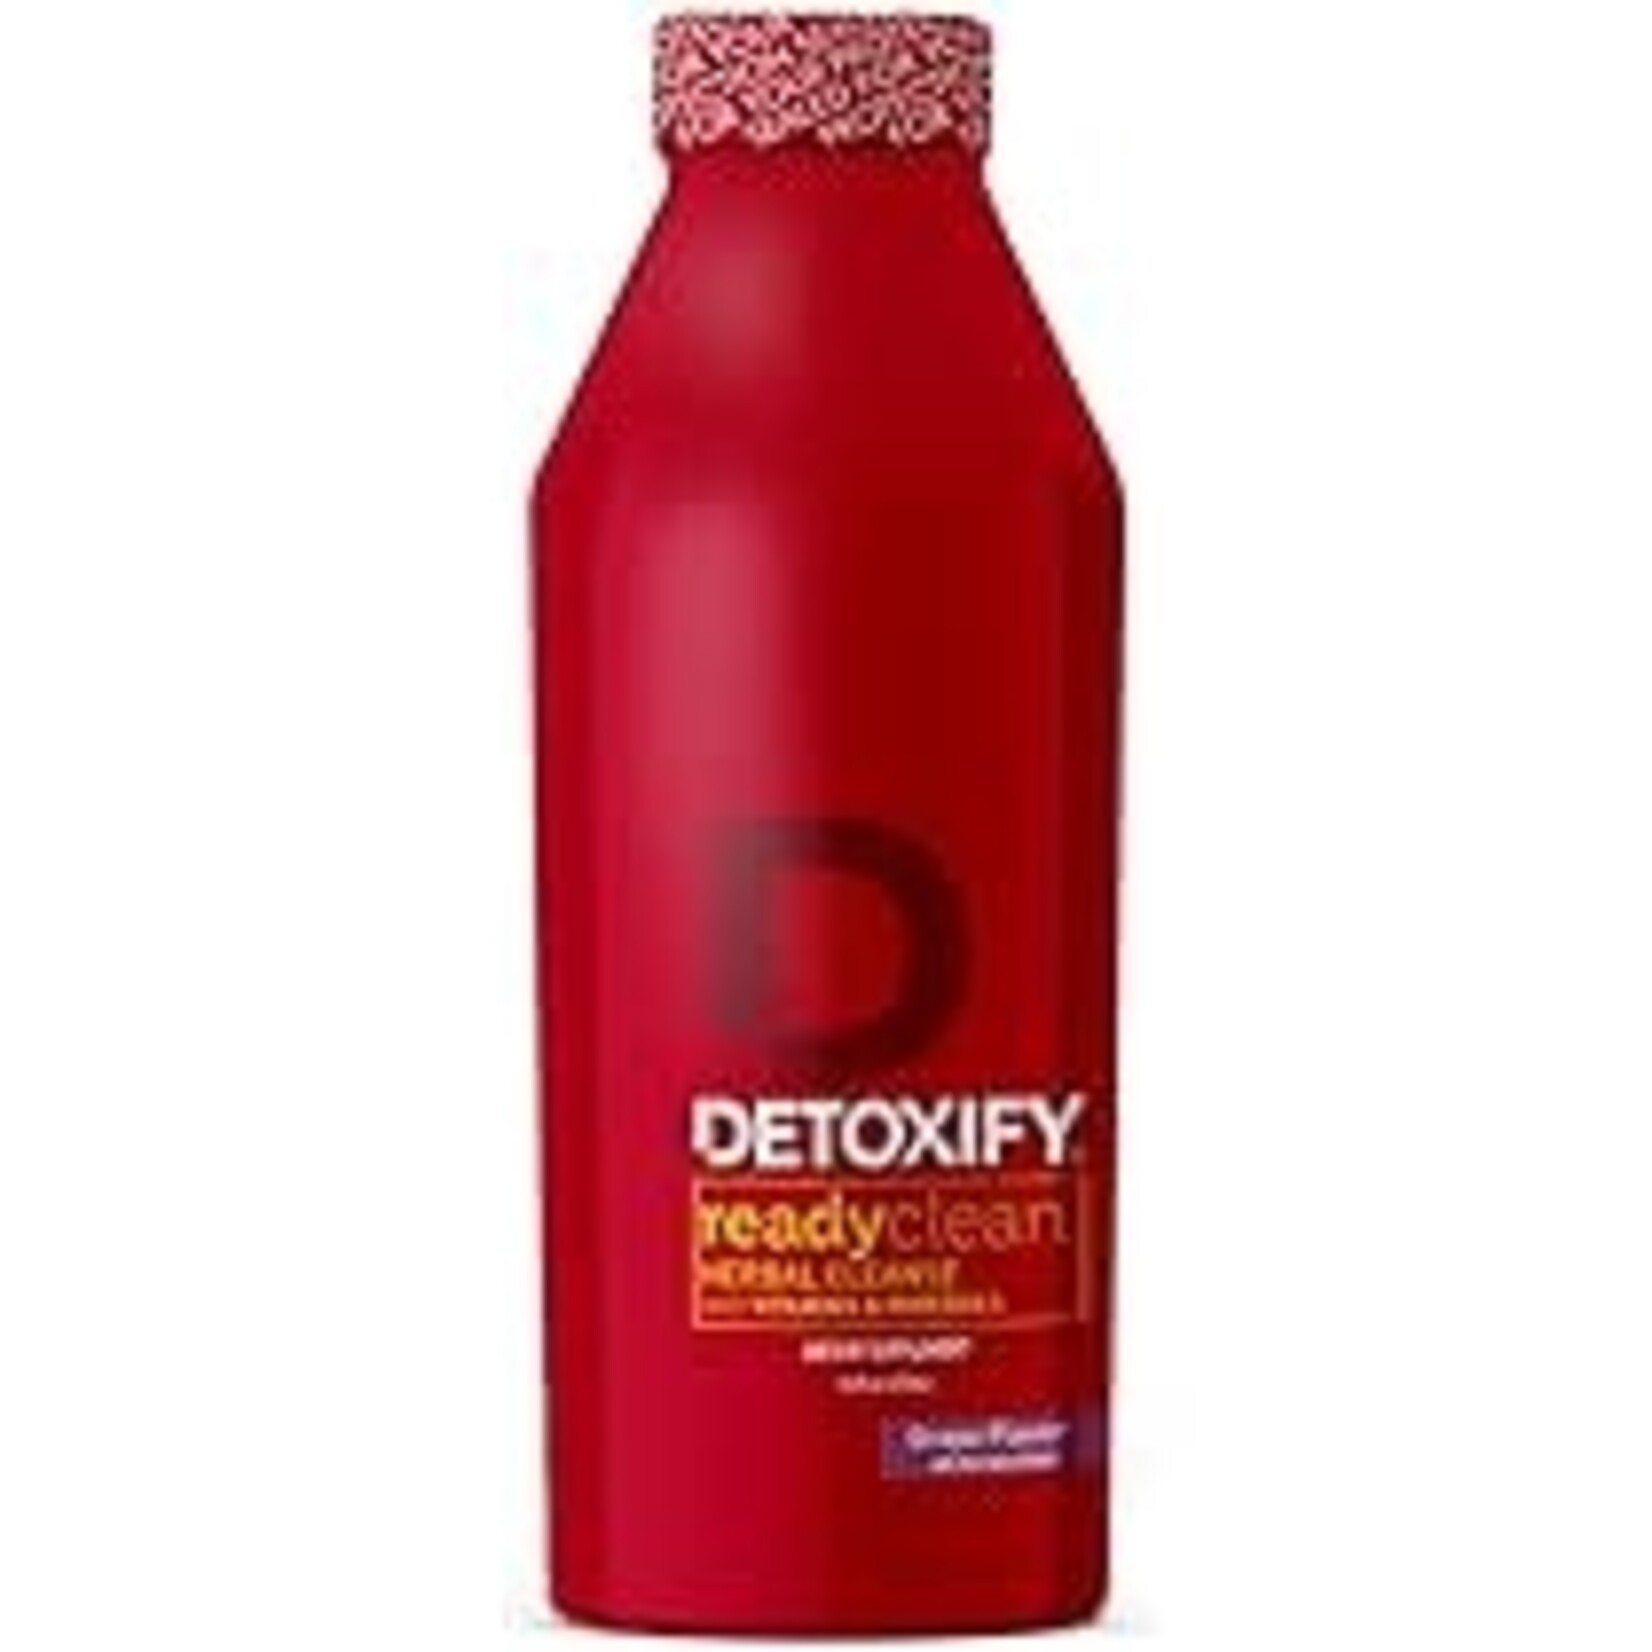 Detoxify Detoxify Ready Clean Herbal Cleanse 16 fl oz